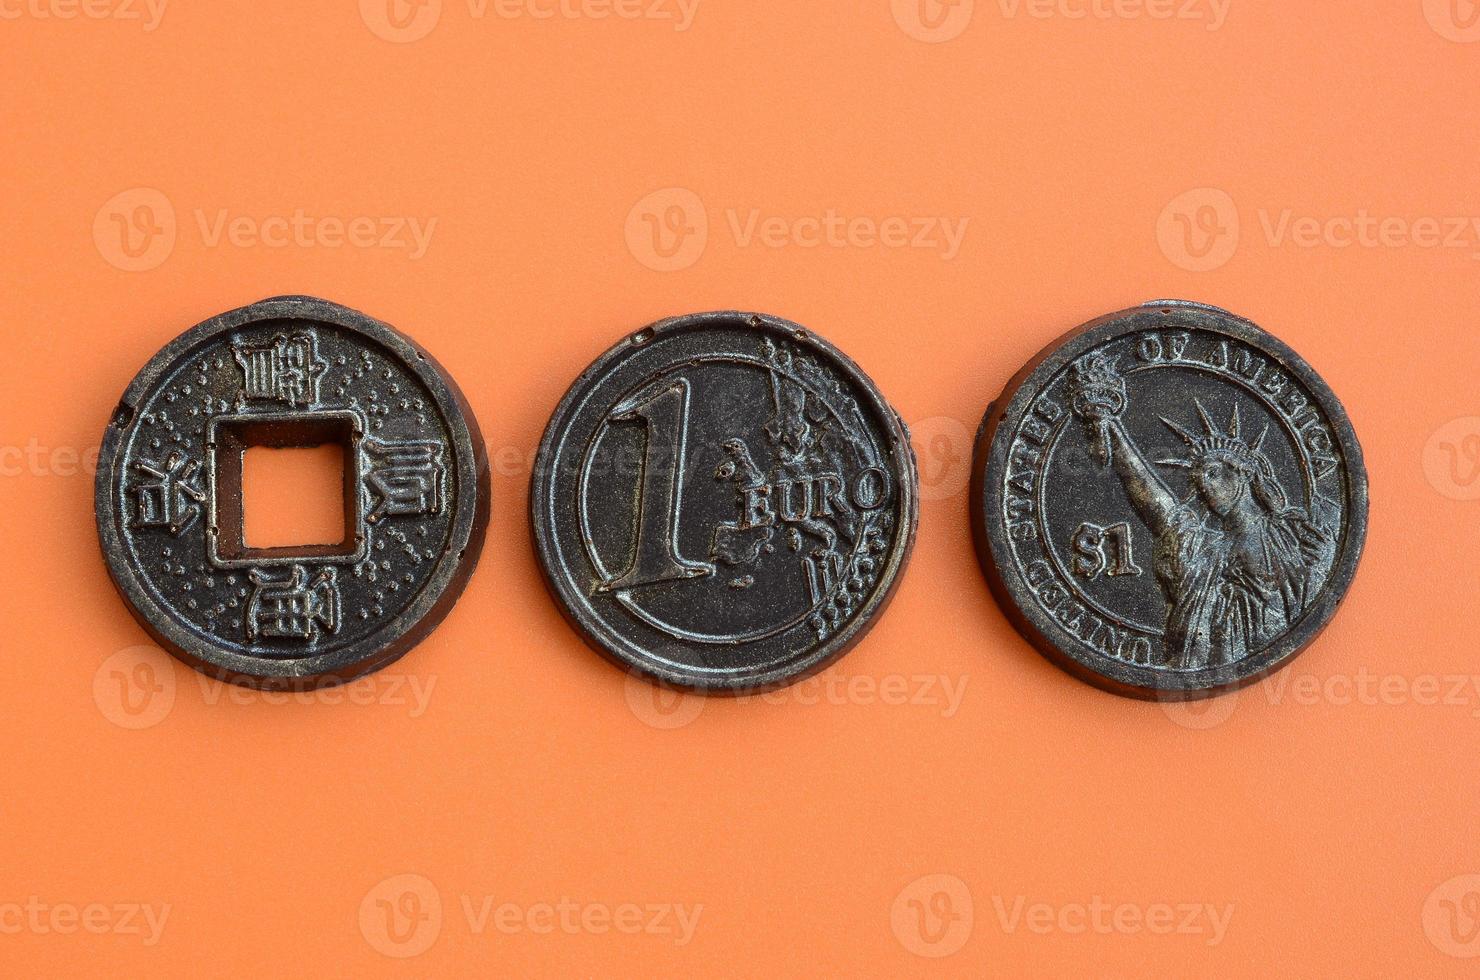 tre choklad Produkter i de form av euro, USA och japan mynt lögn på ett orange plast bakgrund. en modell av kontanter mynt i ett ätlig form foto